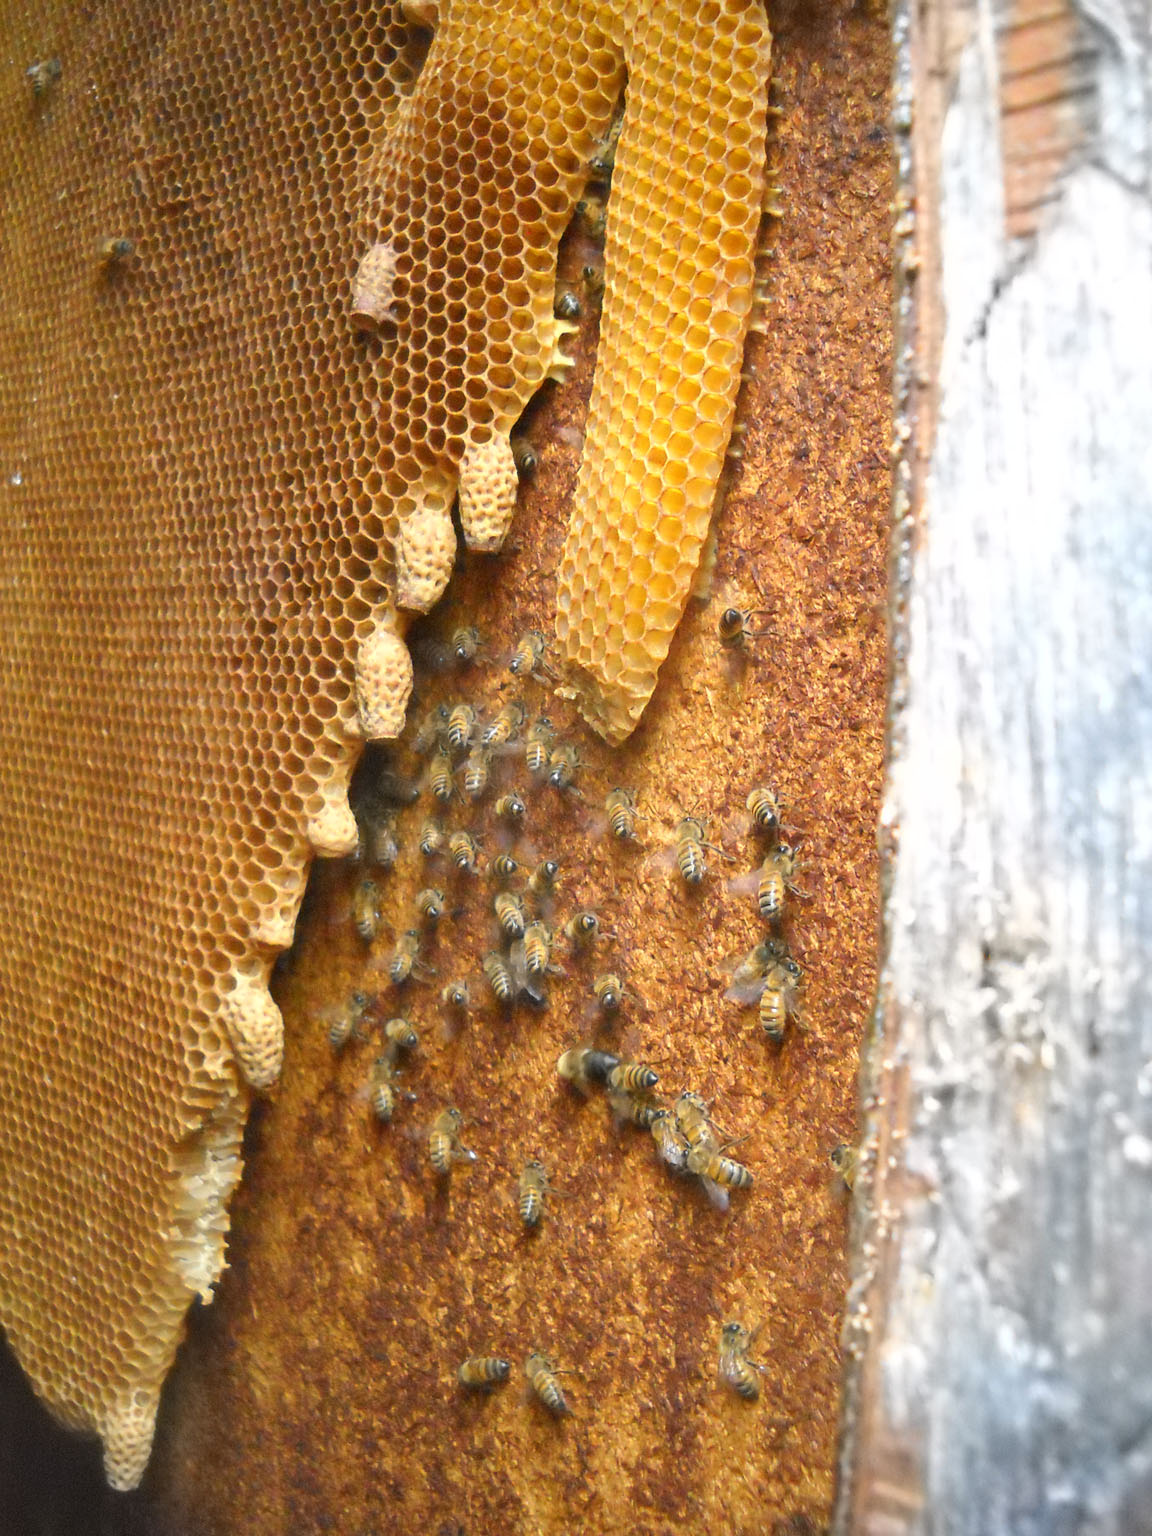 MVCC Beekeeping Feasibility Study